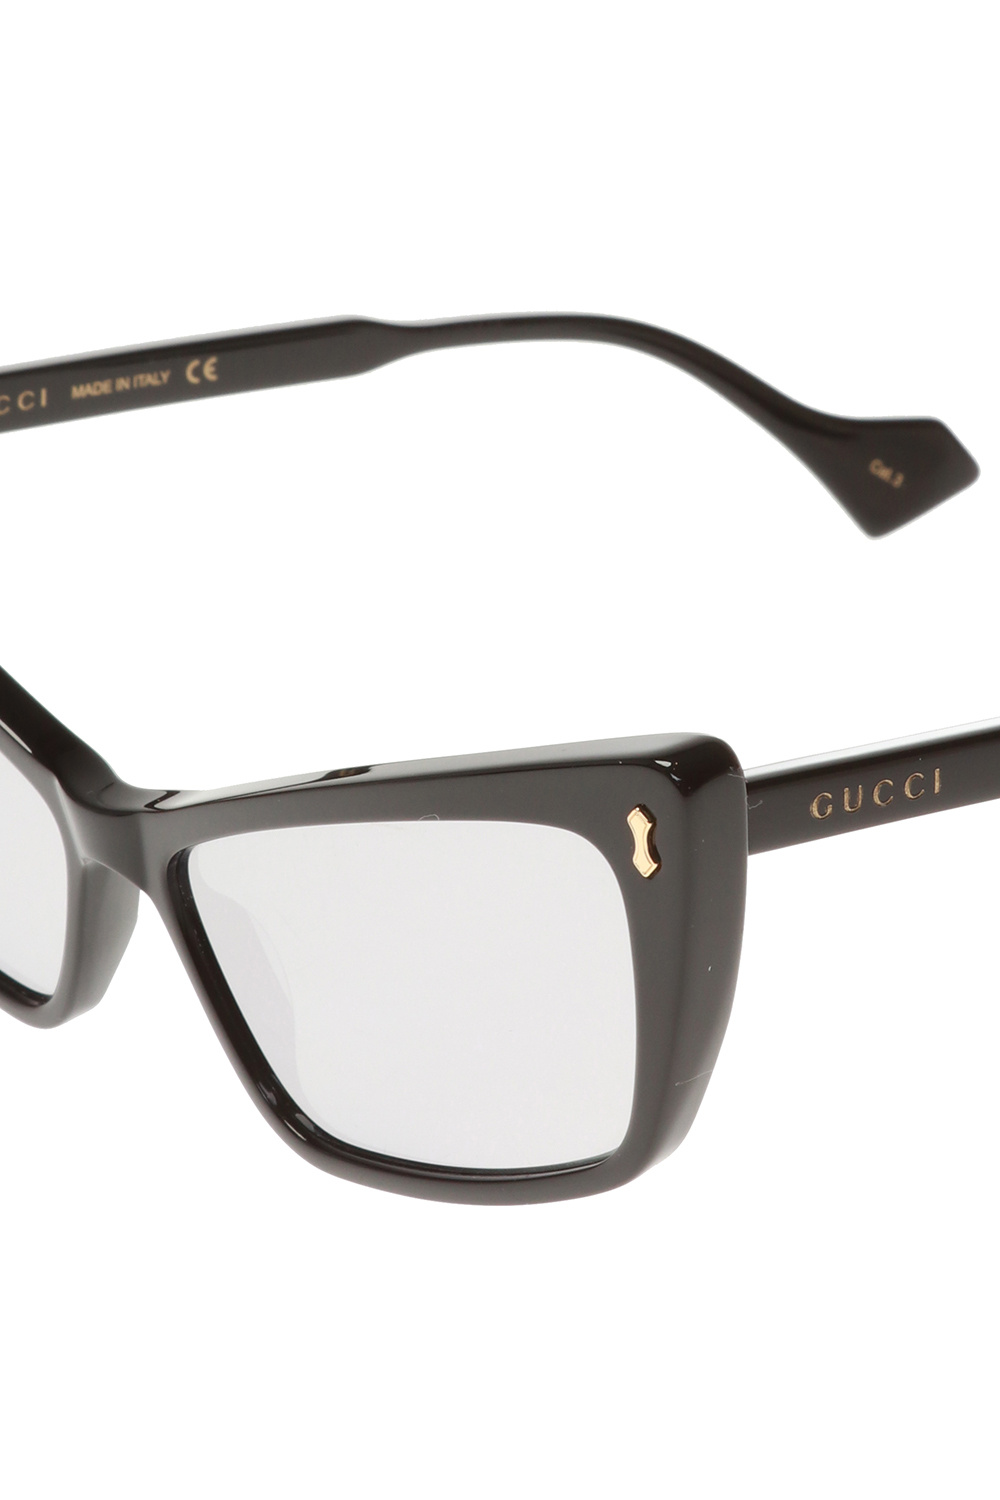 Gucci Pr 13zs Tortoise Sunglasses